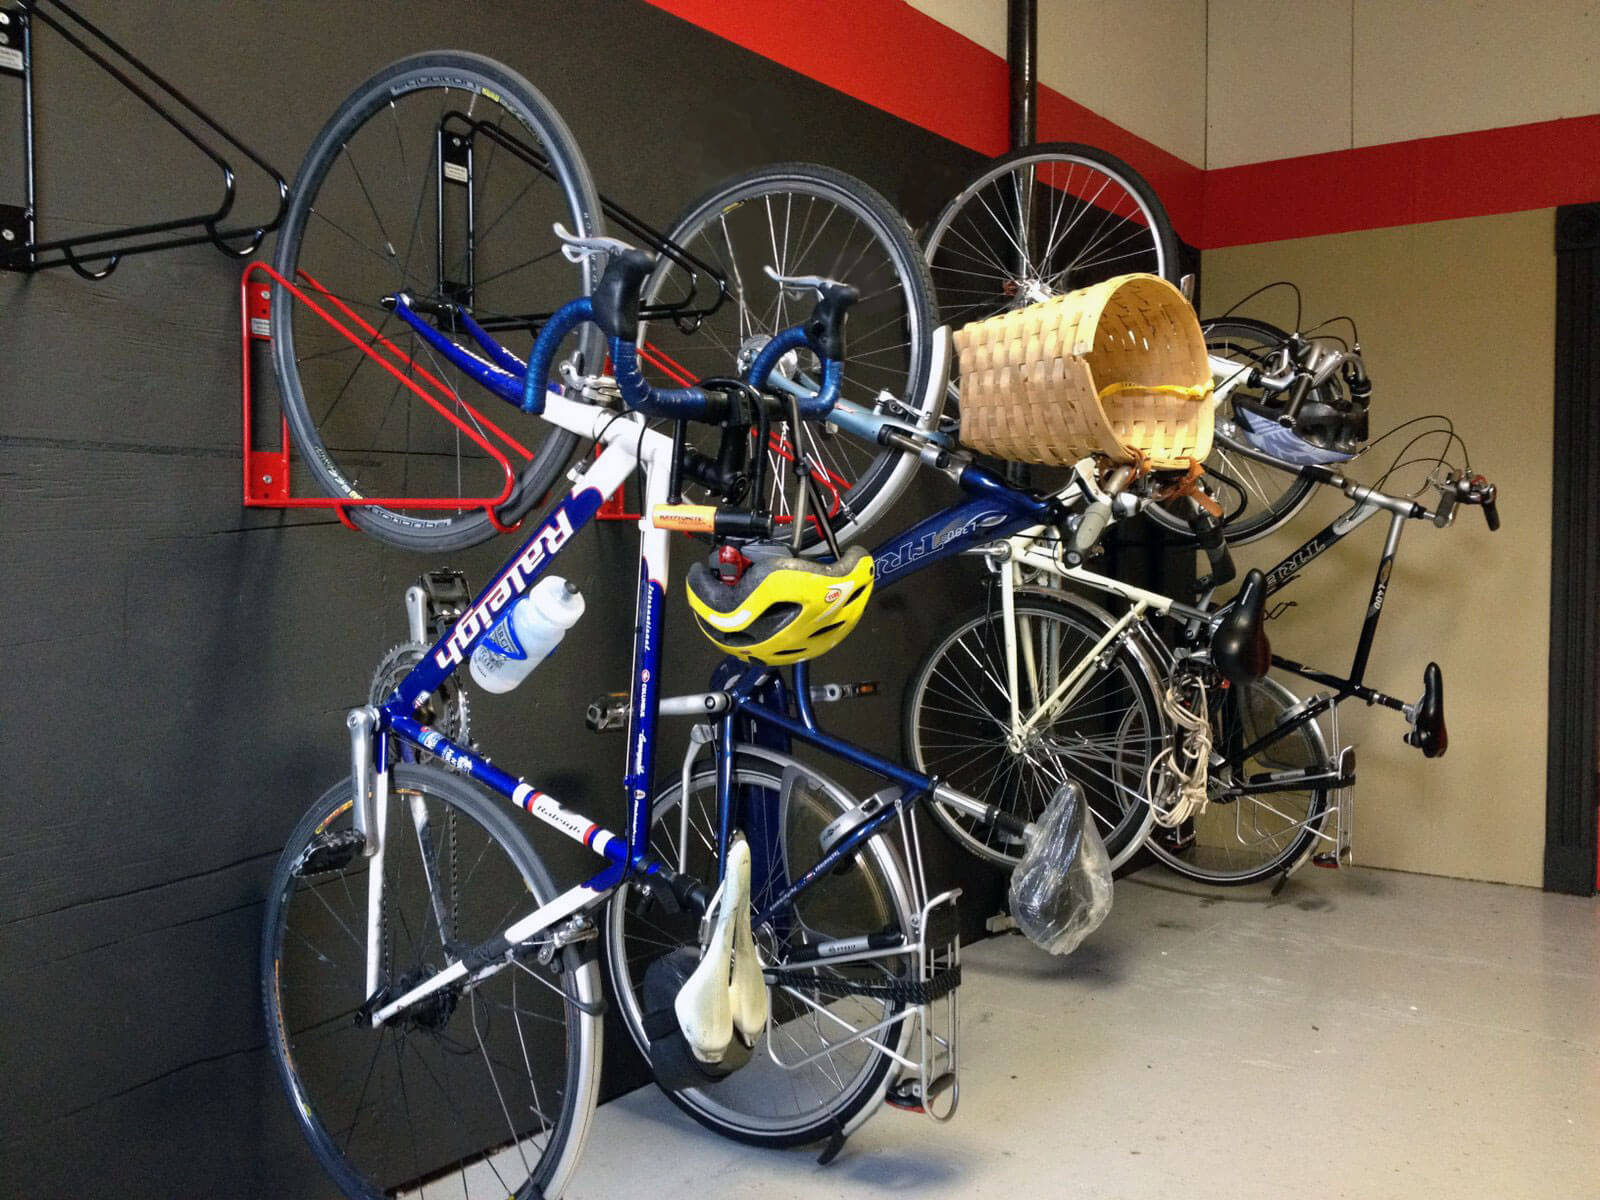 Bike Room with Bike Wall Racks